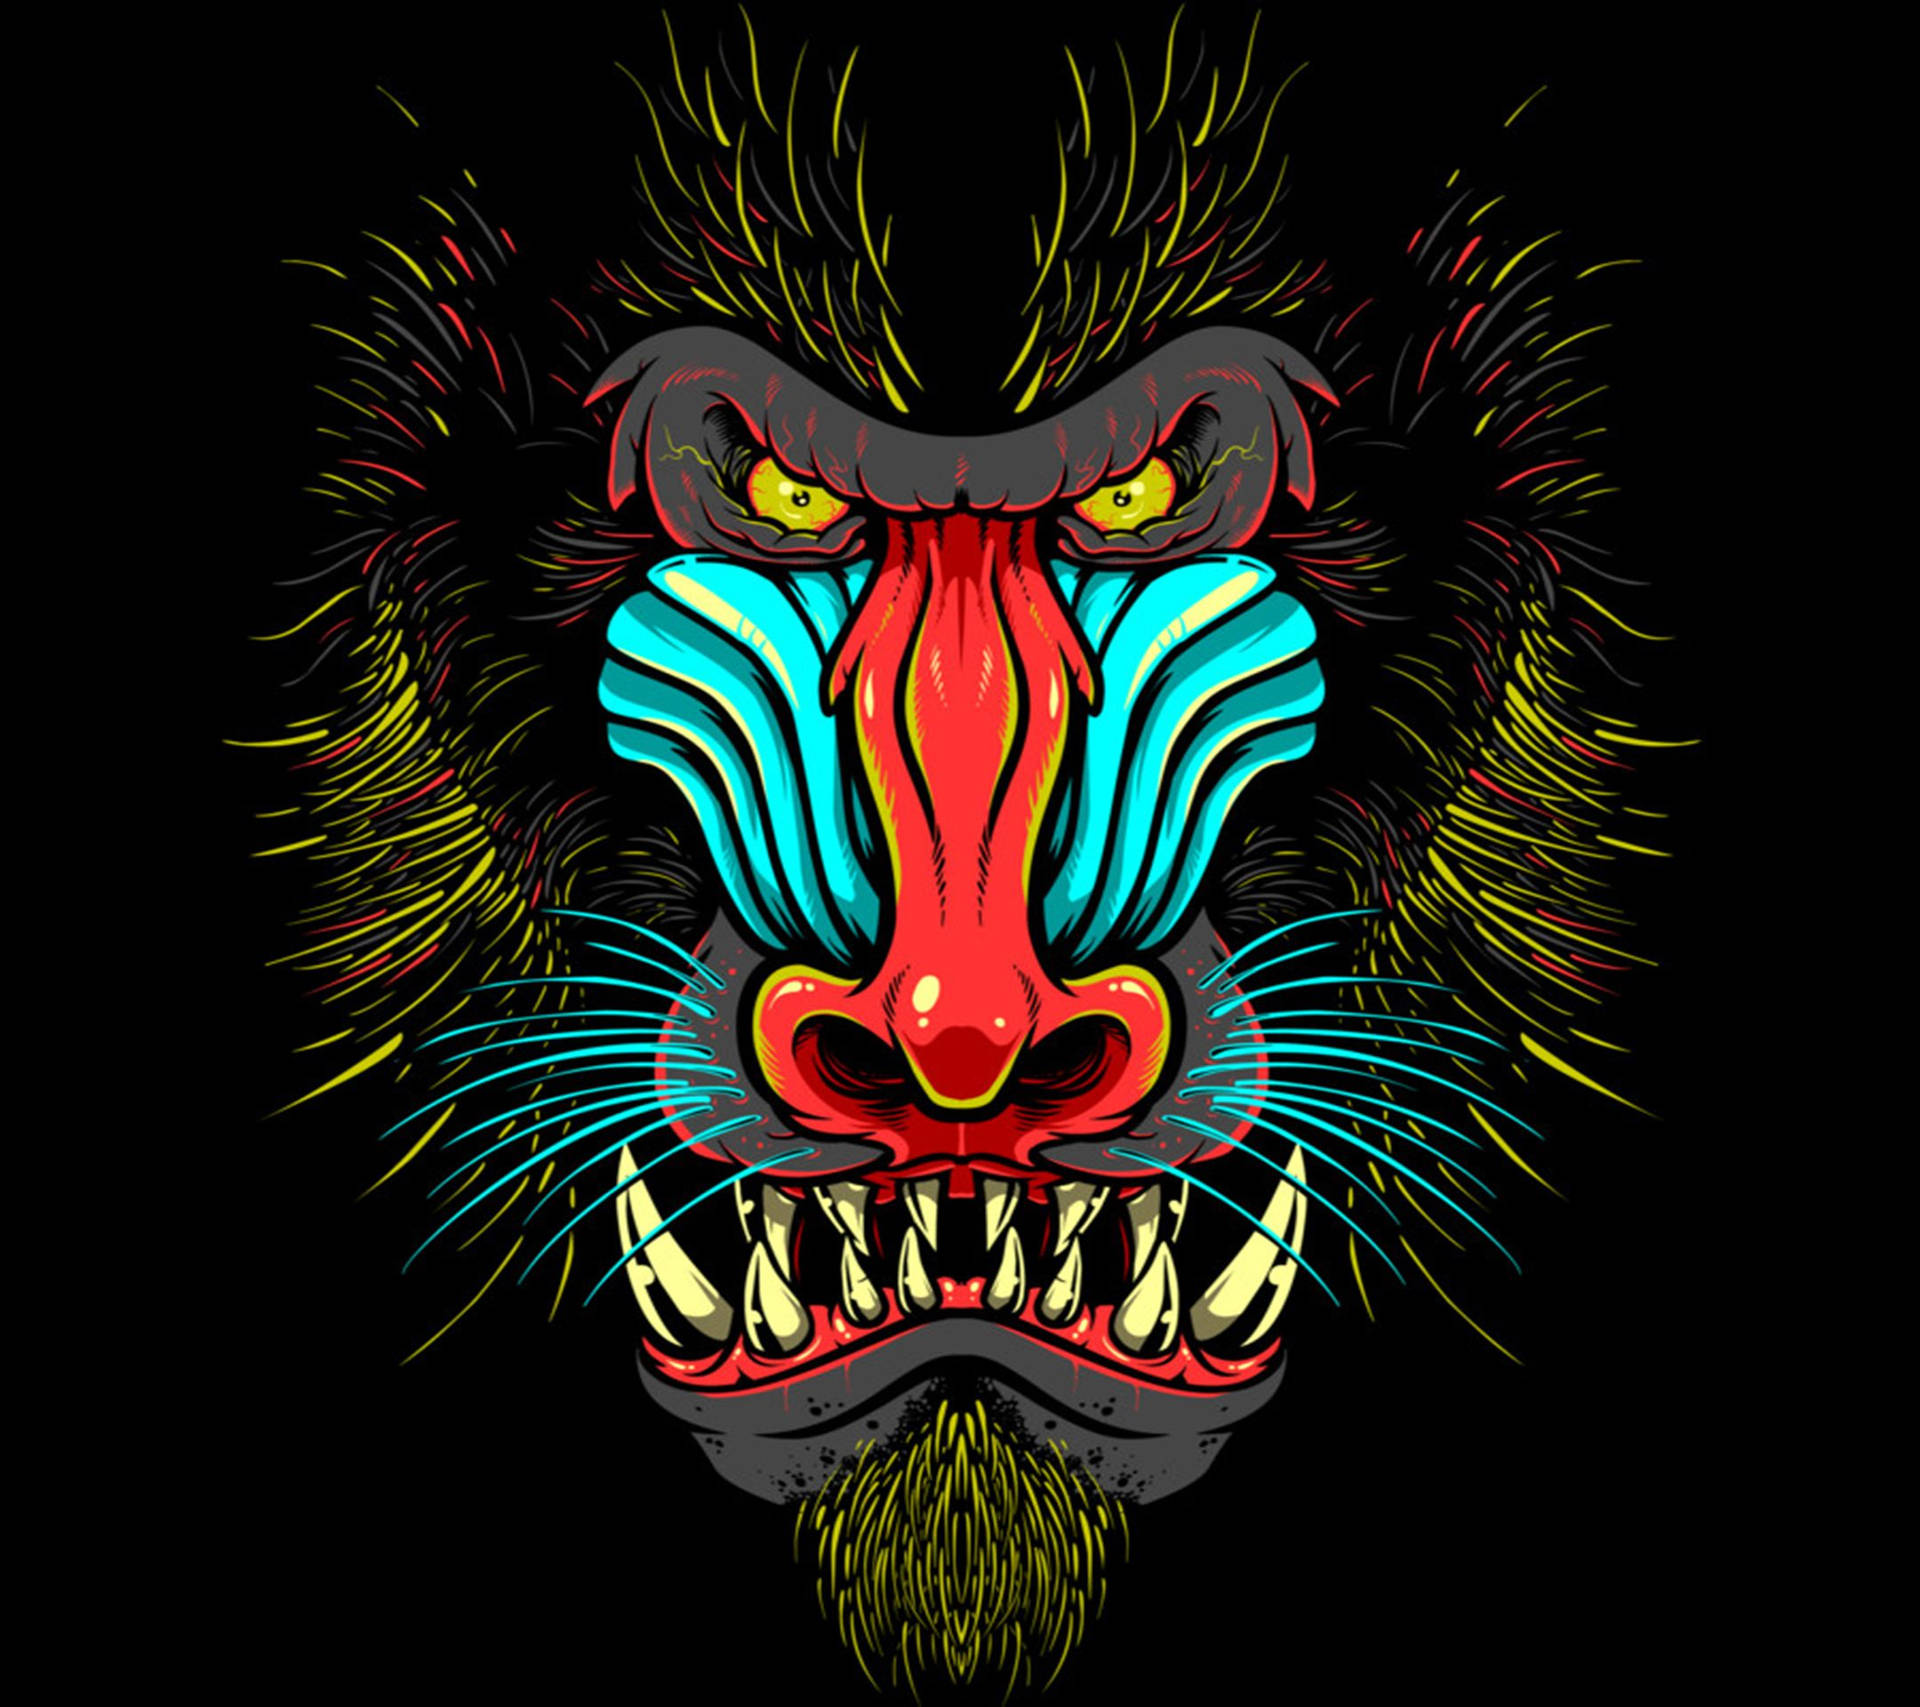 Stylized Colorful Gorilla's Head Illustration Background